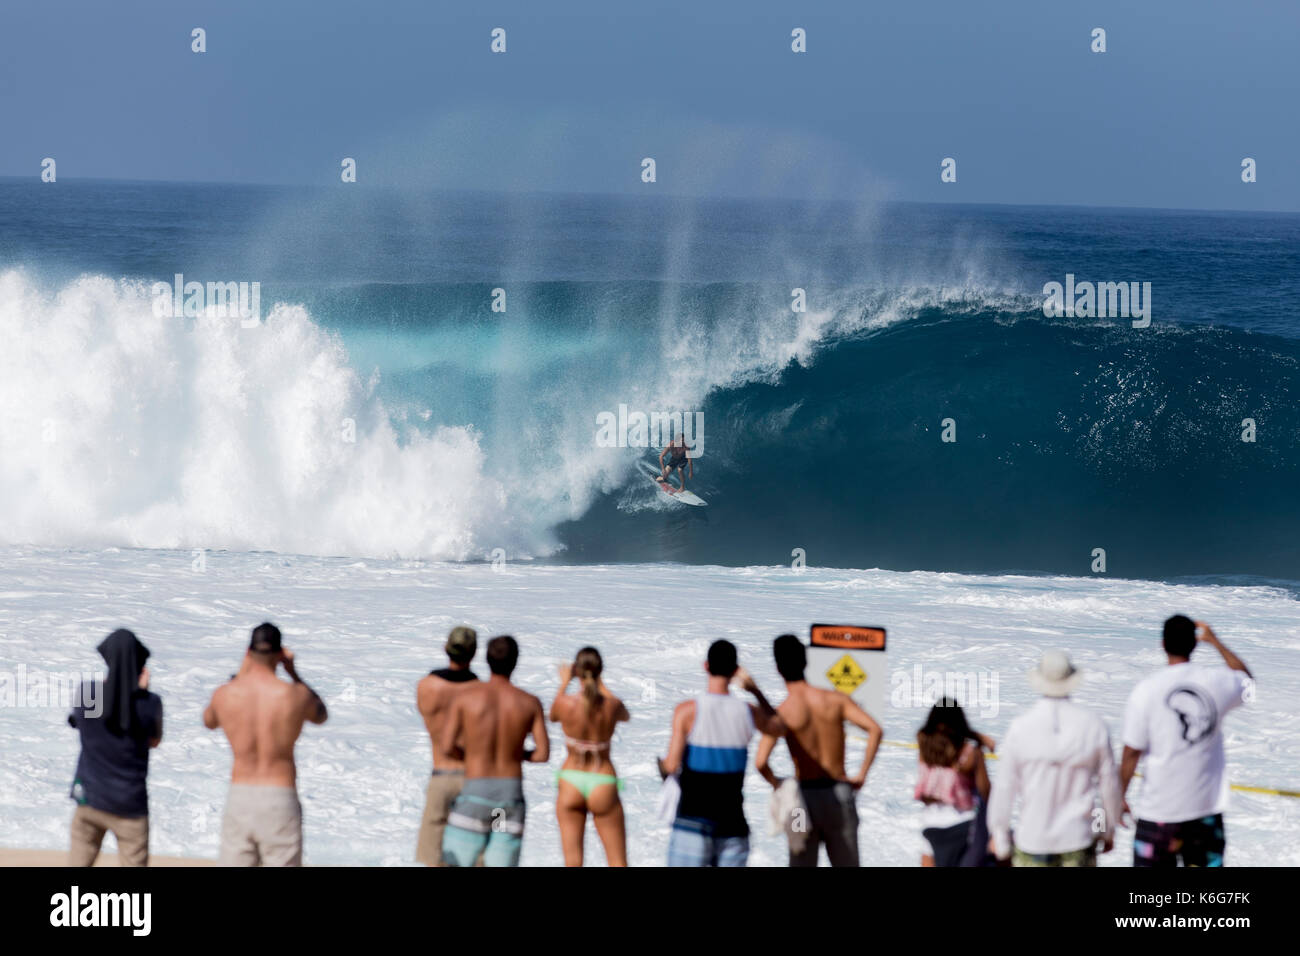 People watching surfer riding wave at Banzai Pipeline, Oahu, Hawaii, USA Stock Photo